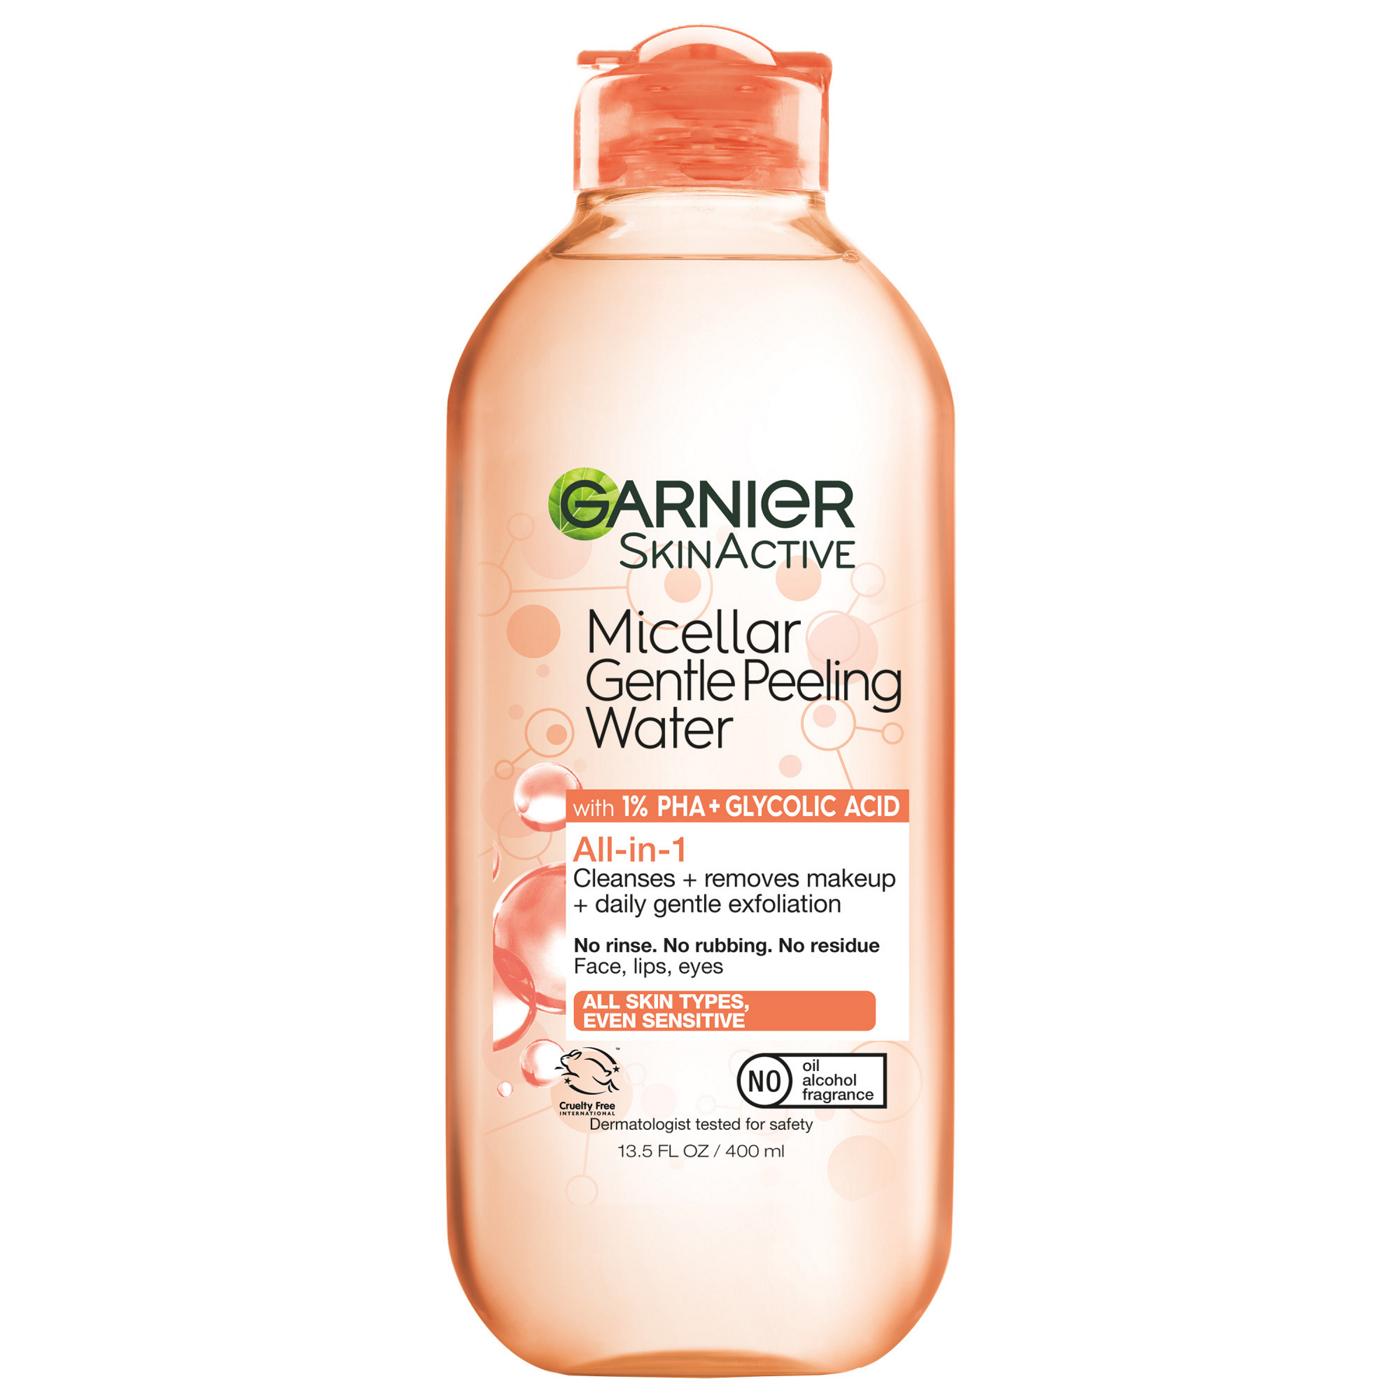 Garnier SkinActive Micellar Gentle Peeling Water; image 1 of 8